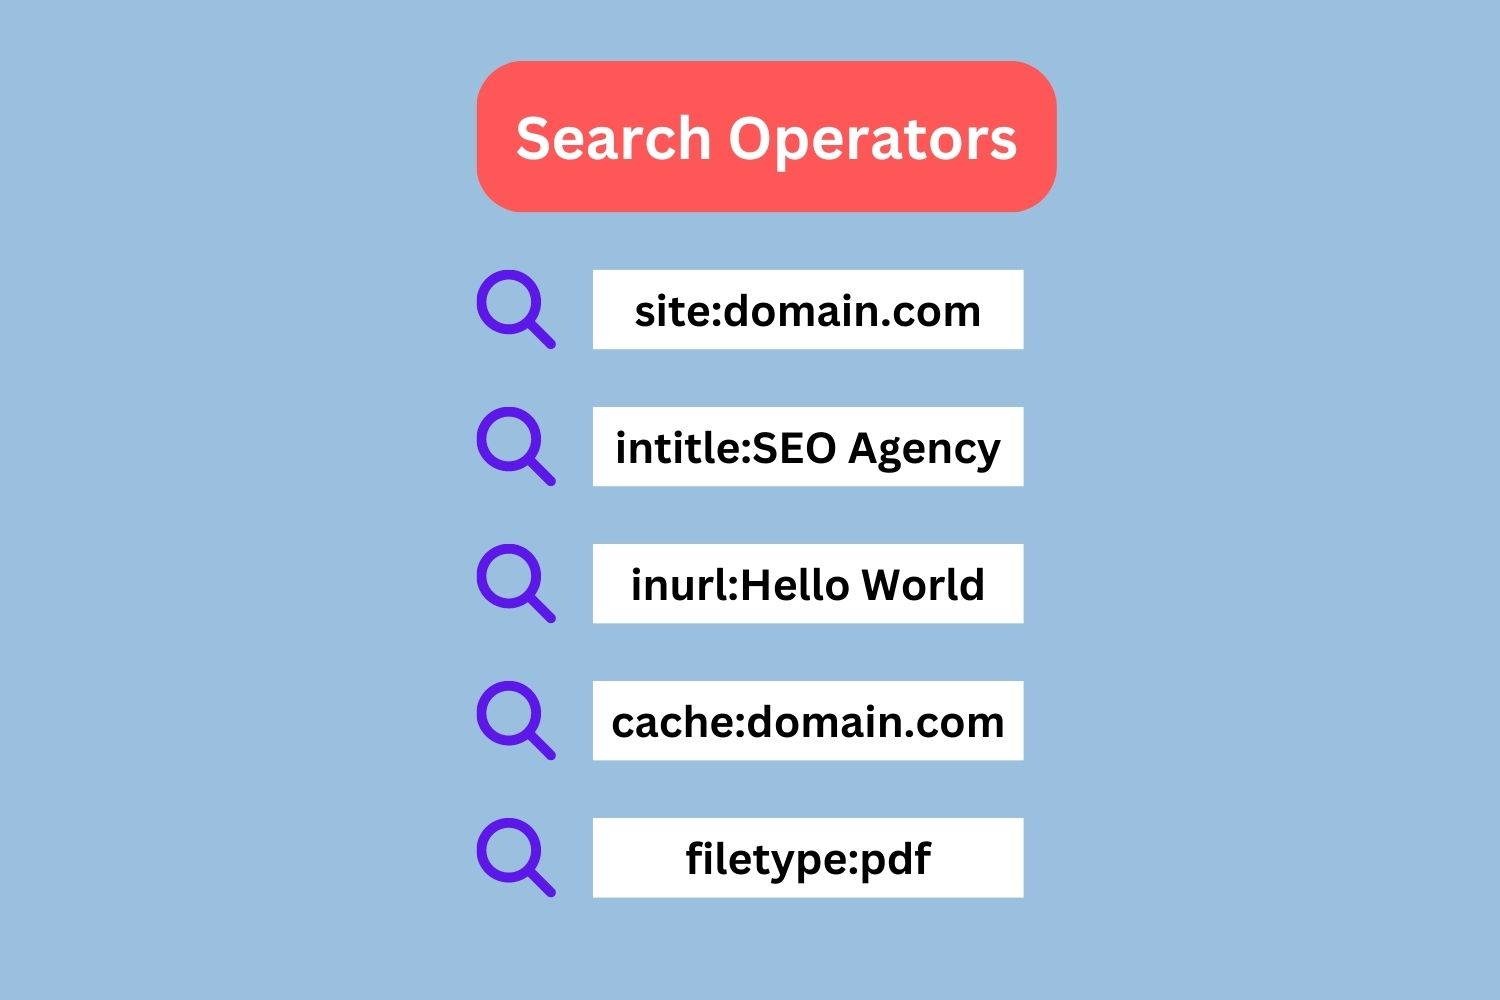 Google Search Operators: Basic and Advanced Operators